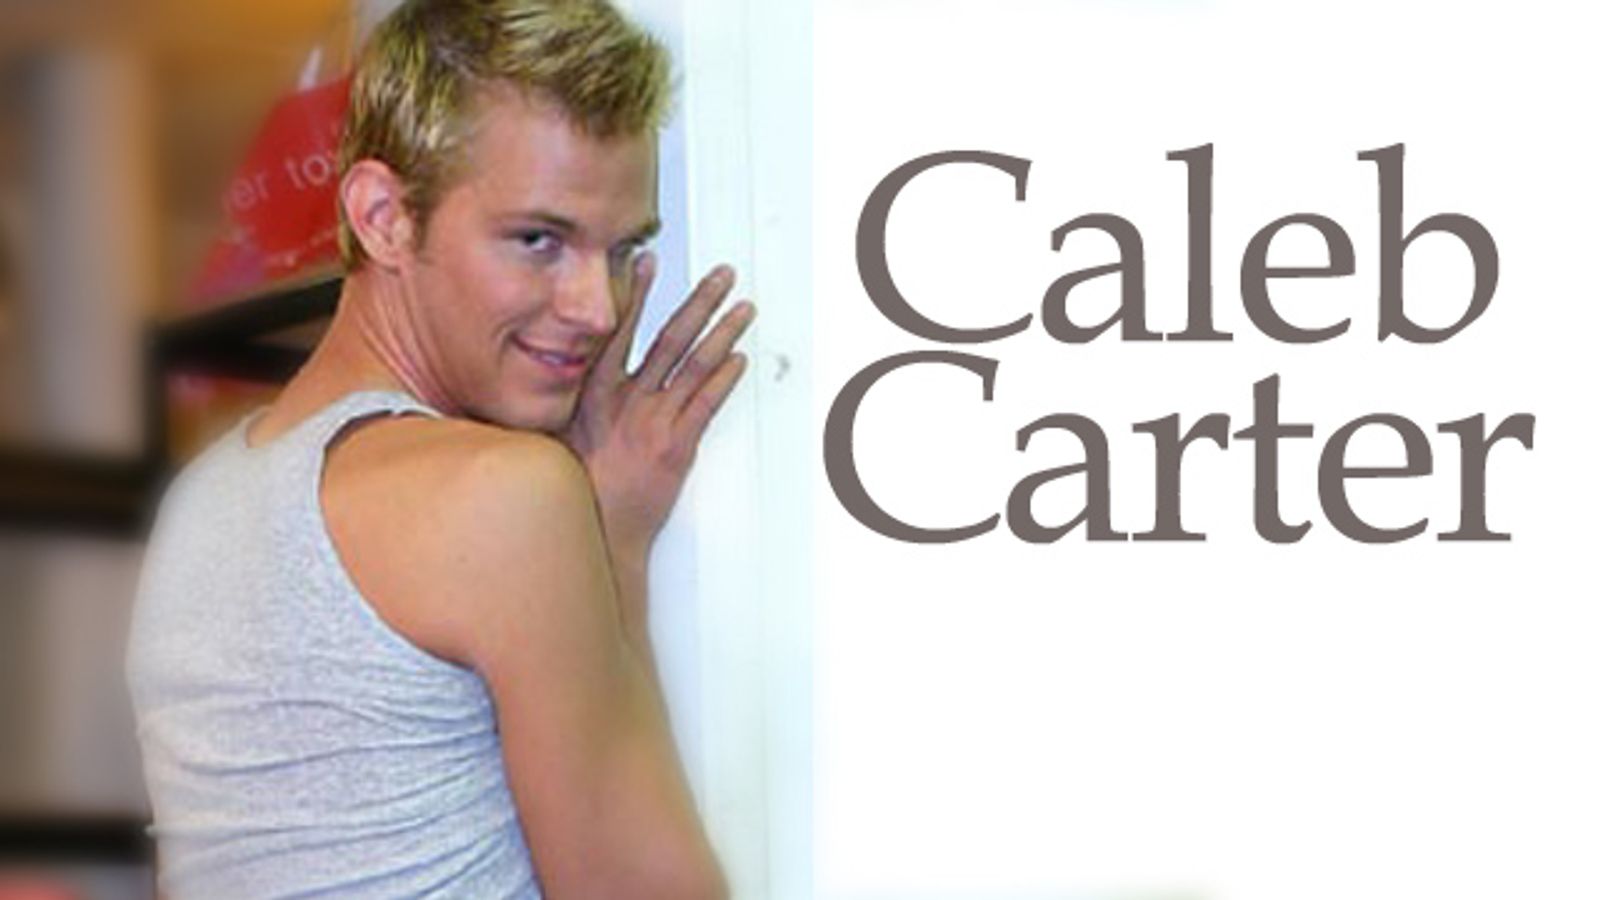 Gay Porn Star Caleb Carter Dies